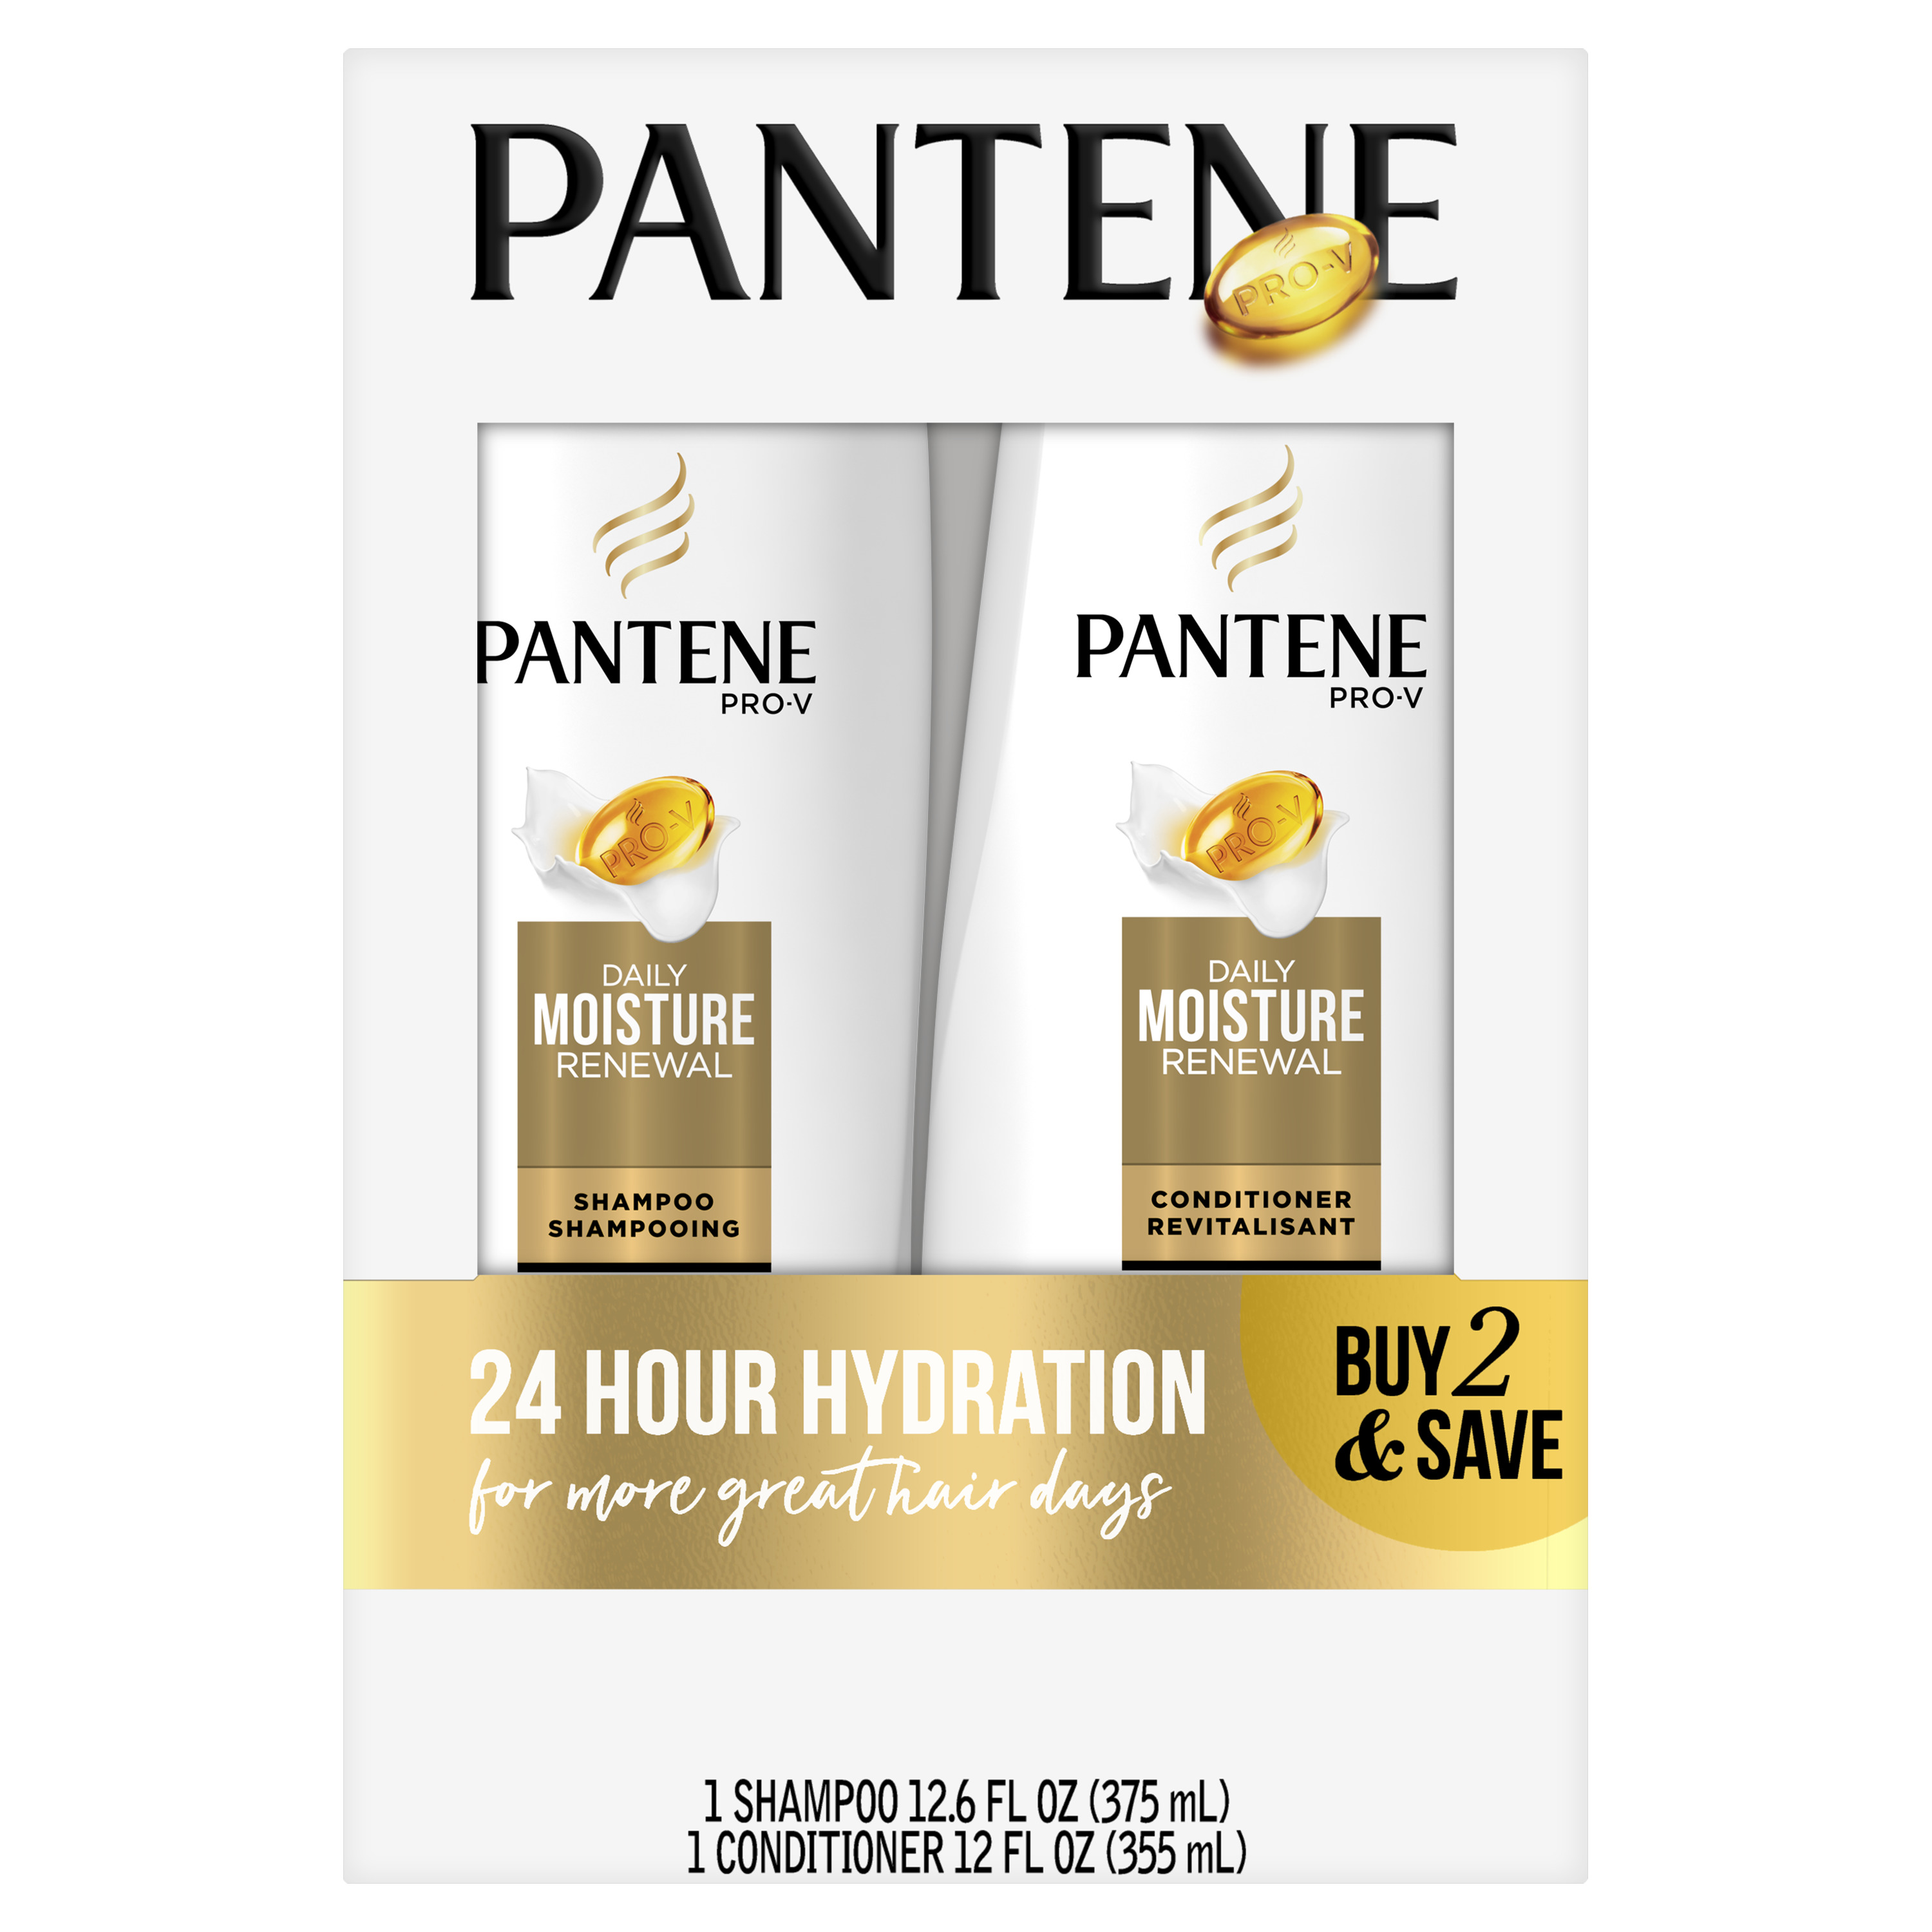 Pantene Shampoo Conditioner Set, Daily Moisture Renewal, 12-12.6 oz - image 3 of 10